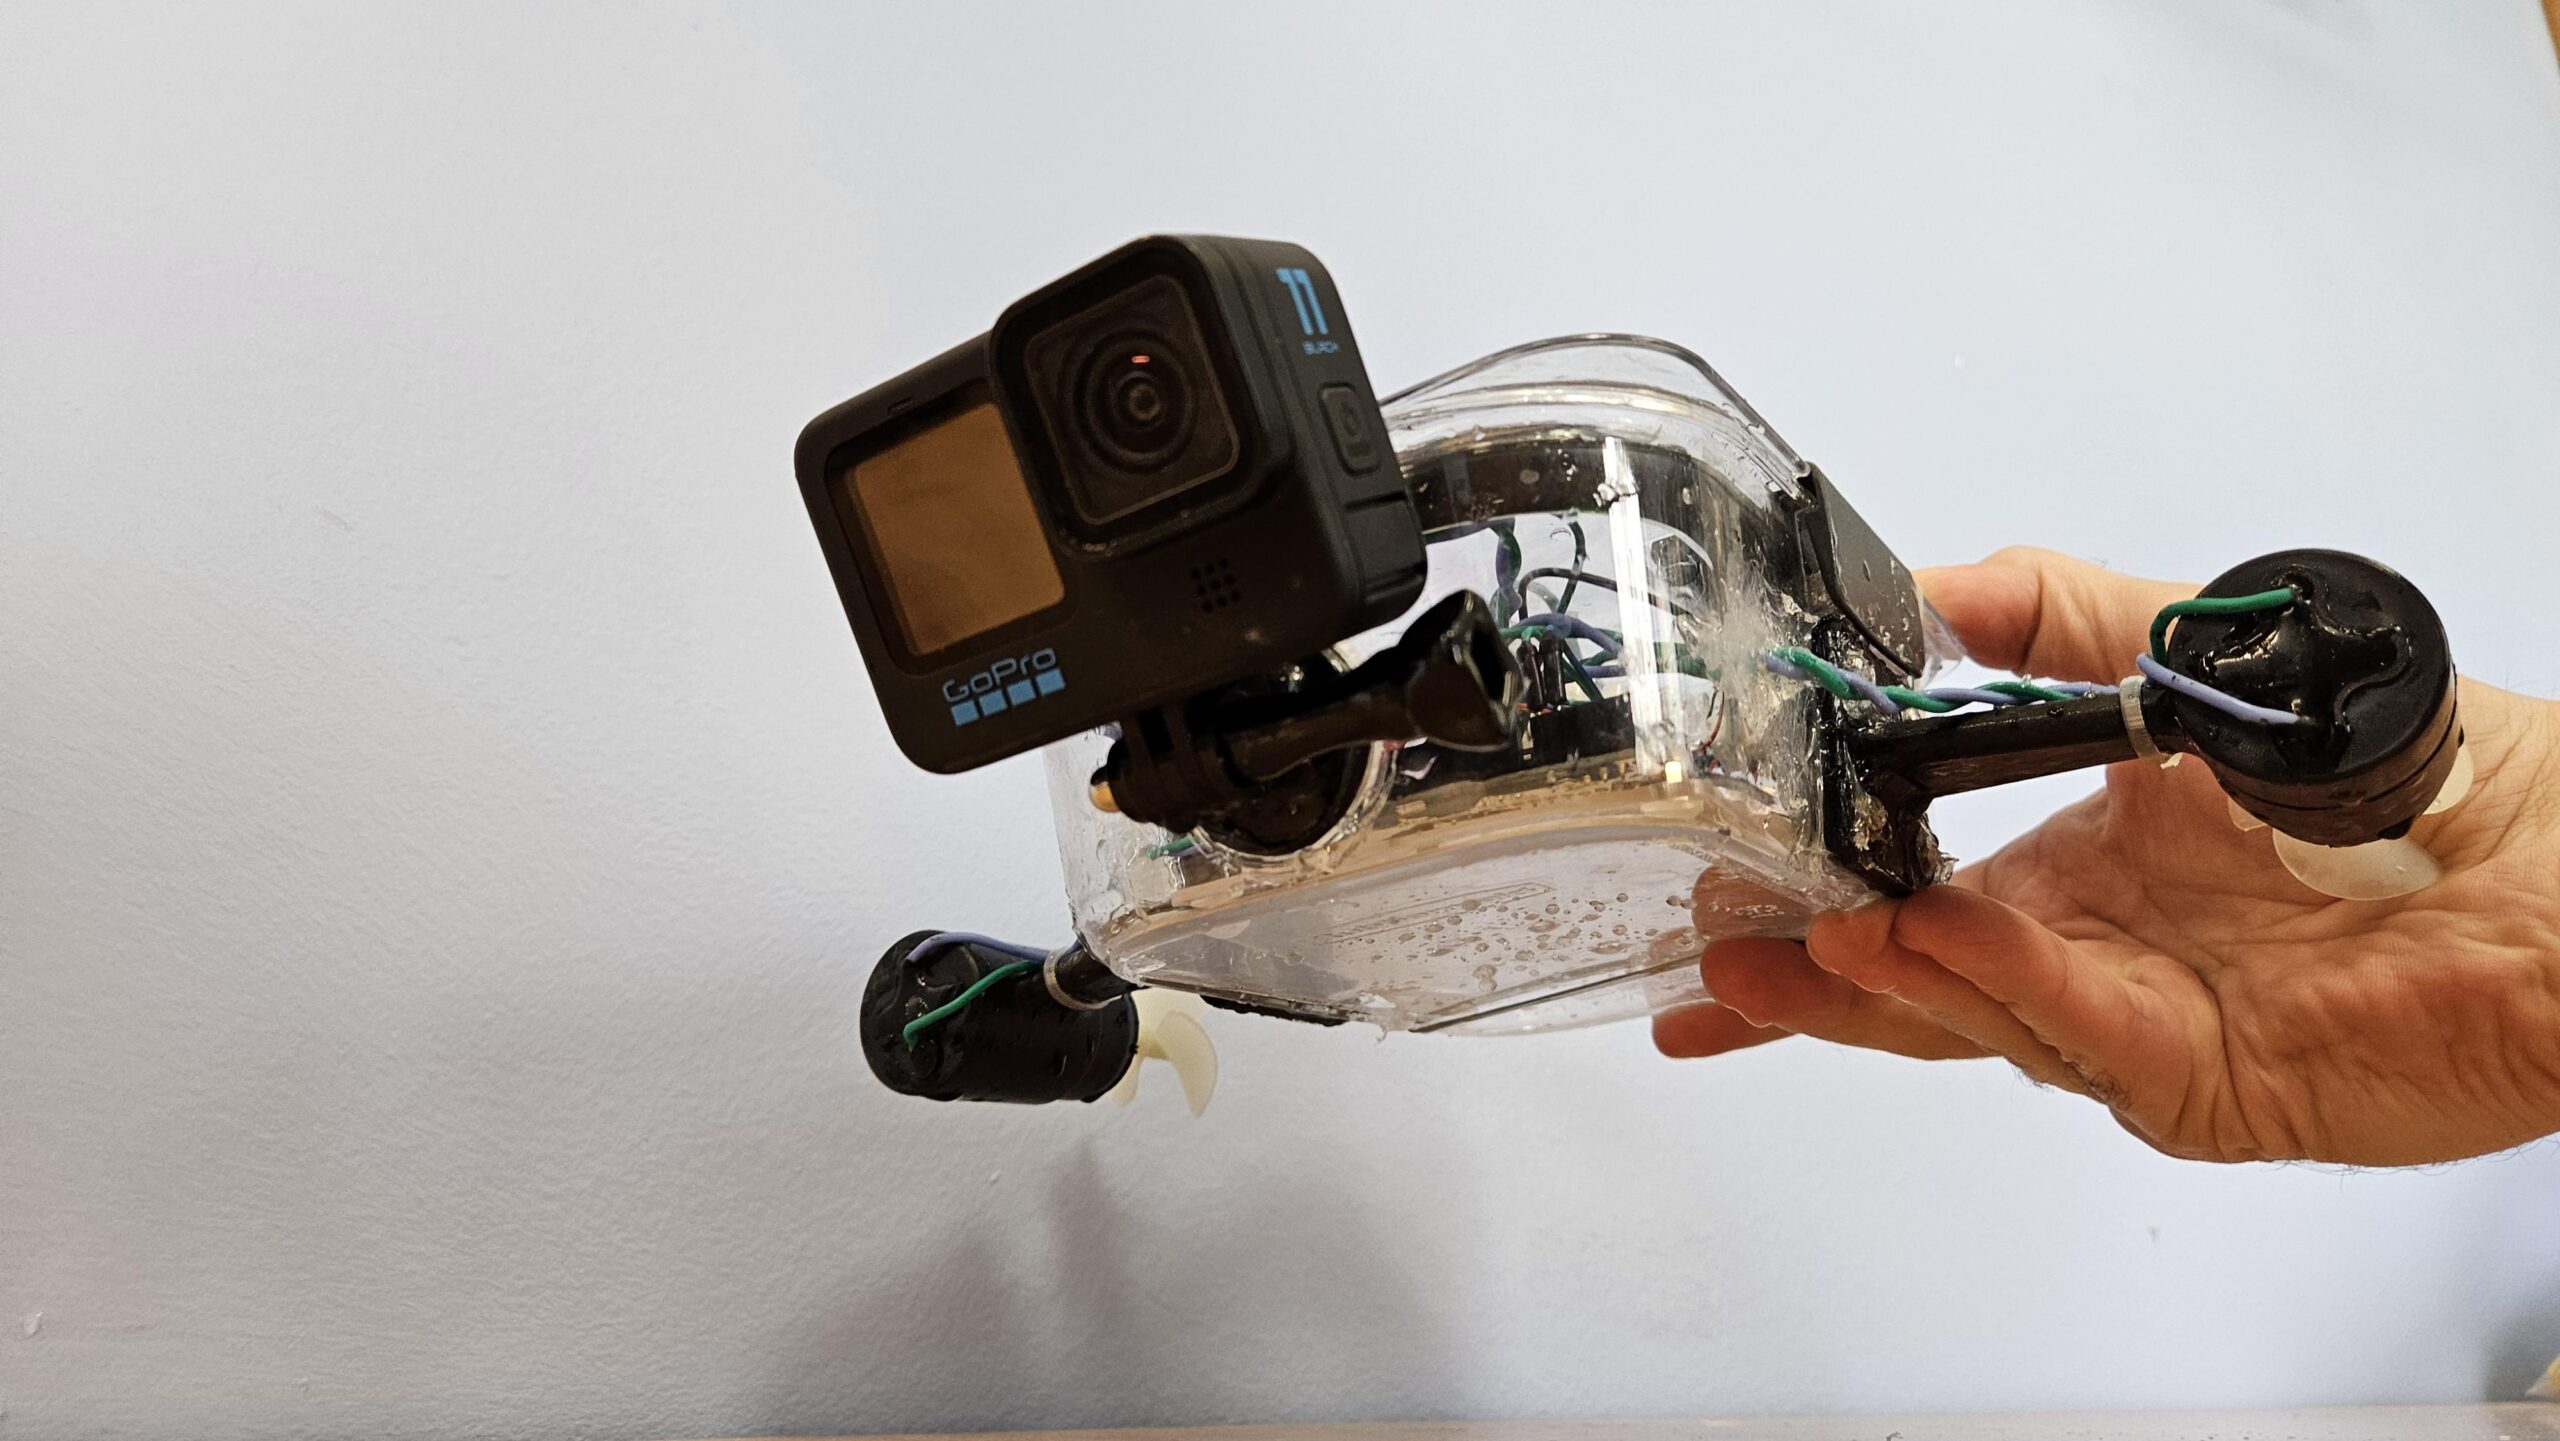 An ultra-affordable DIY underwater ROV